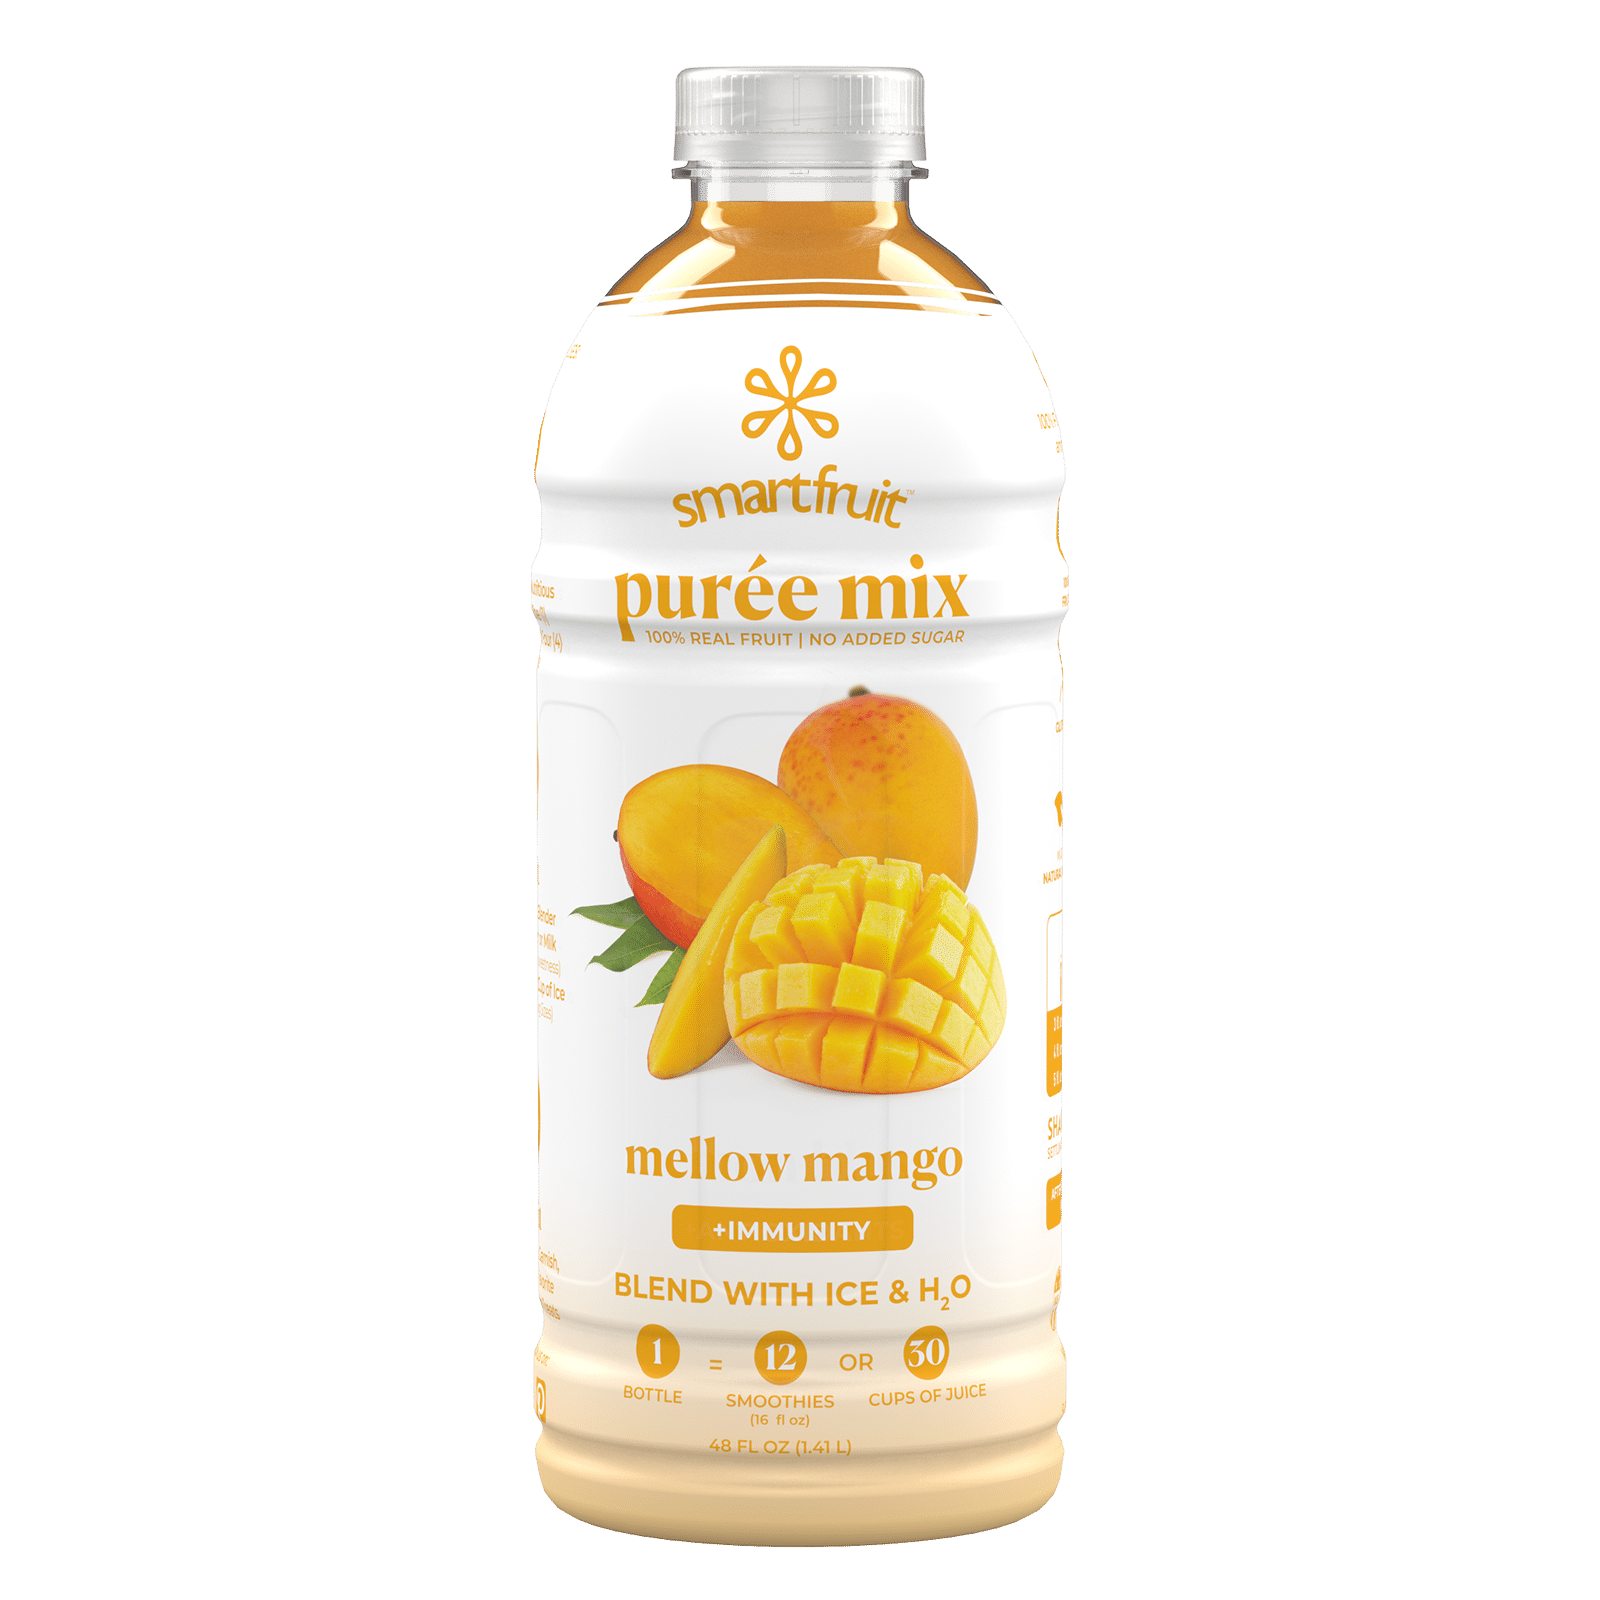 Smartfruit Mellow Mango Puree Mix bottle